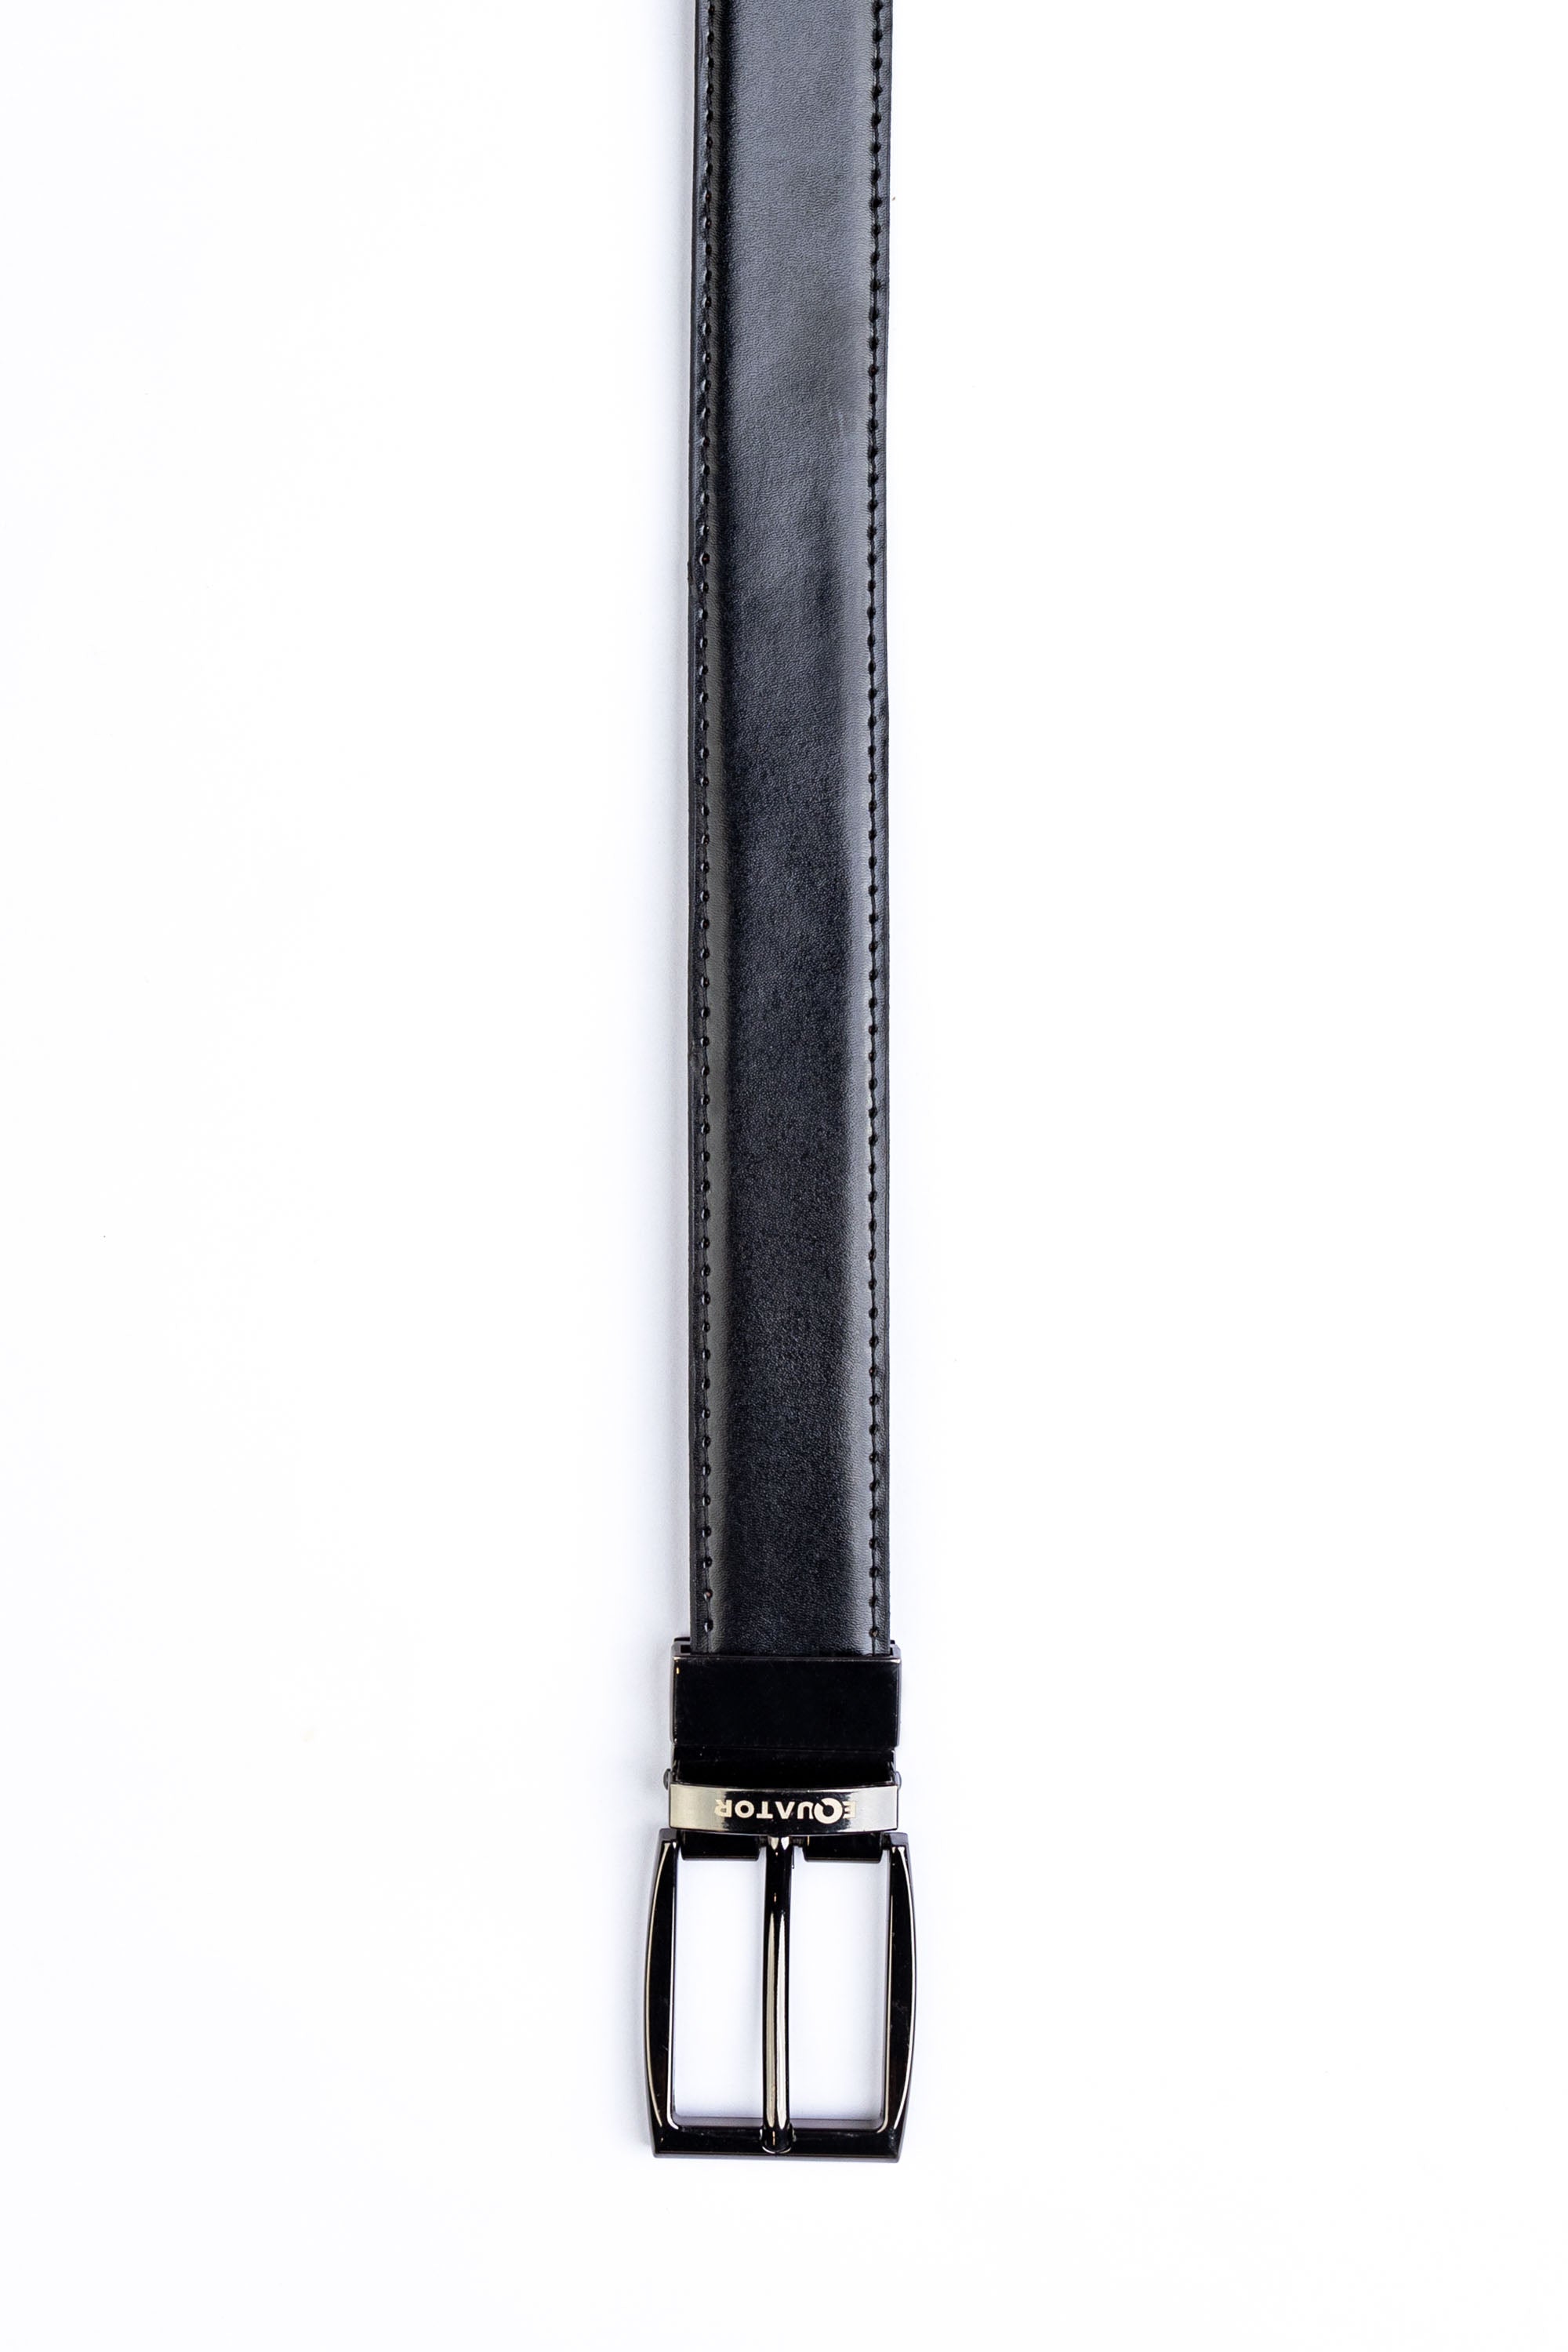 Prestige Leather Belt